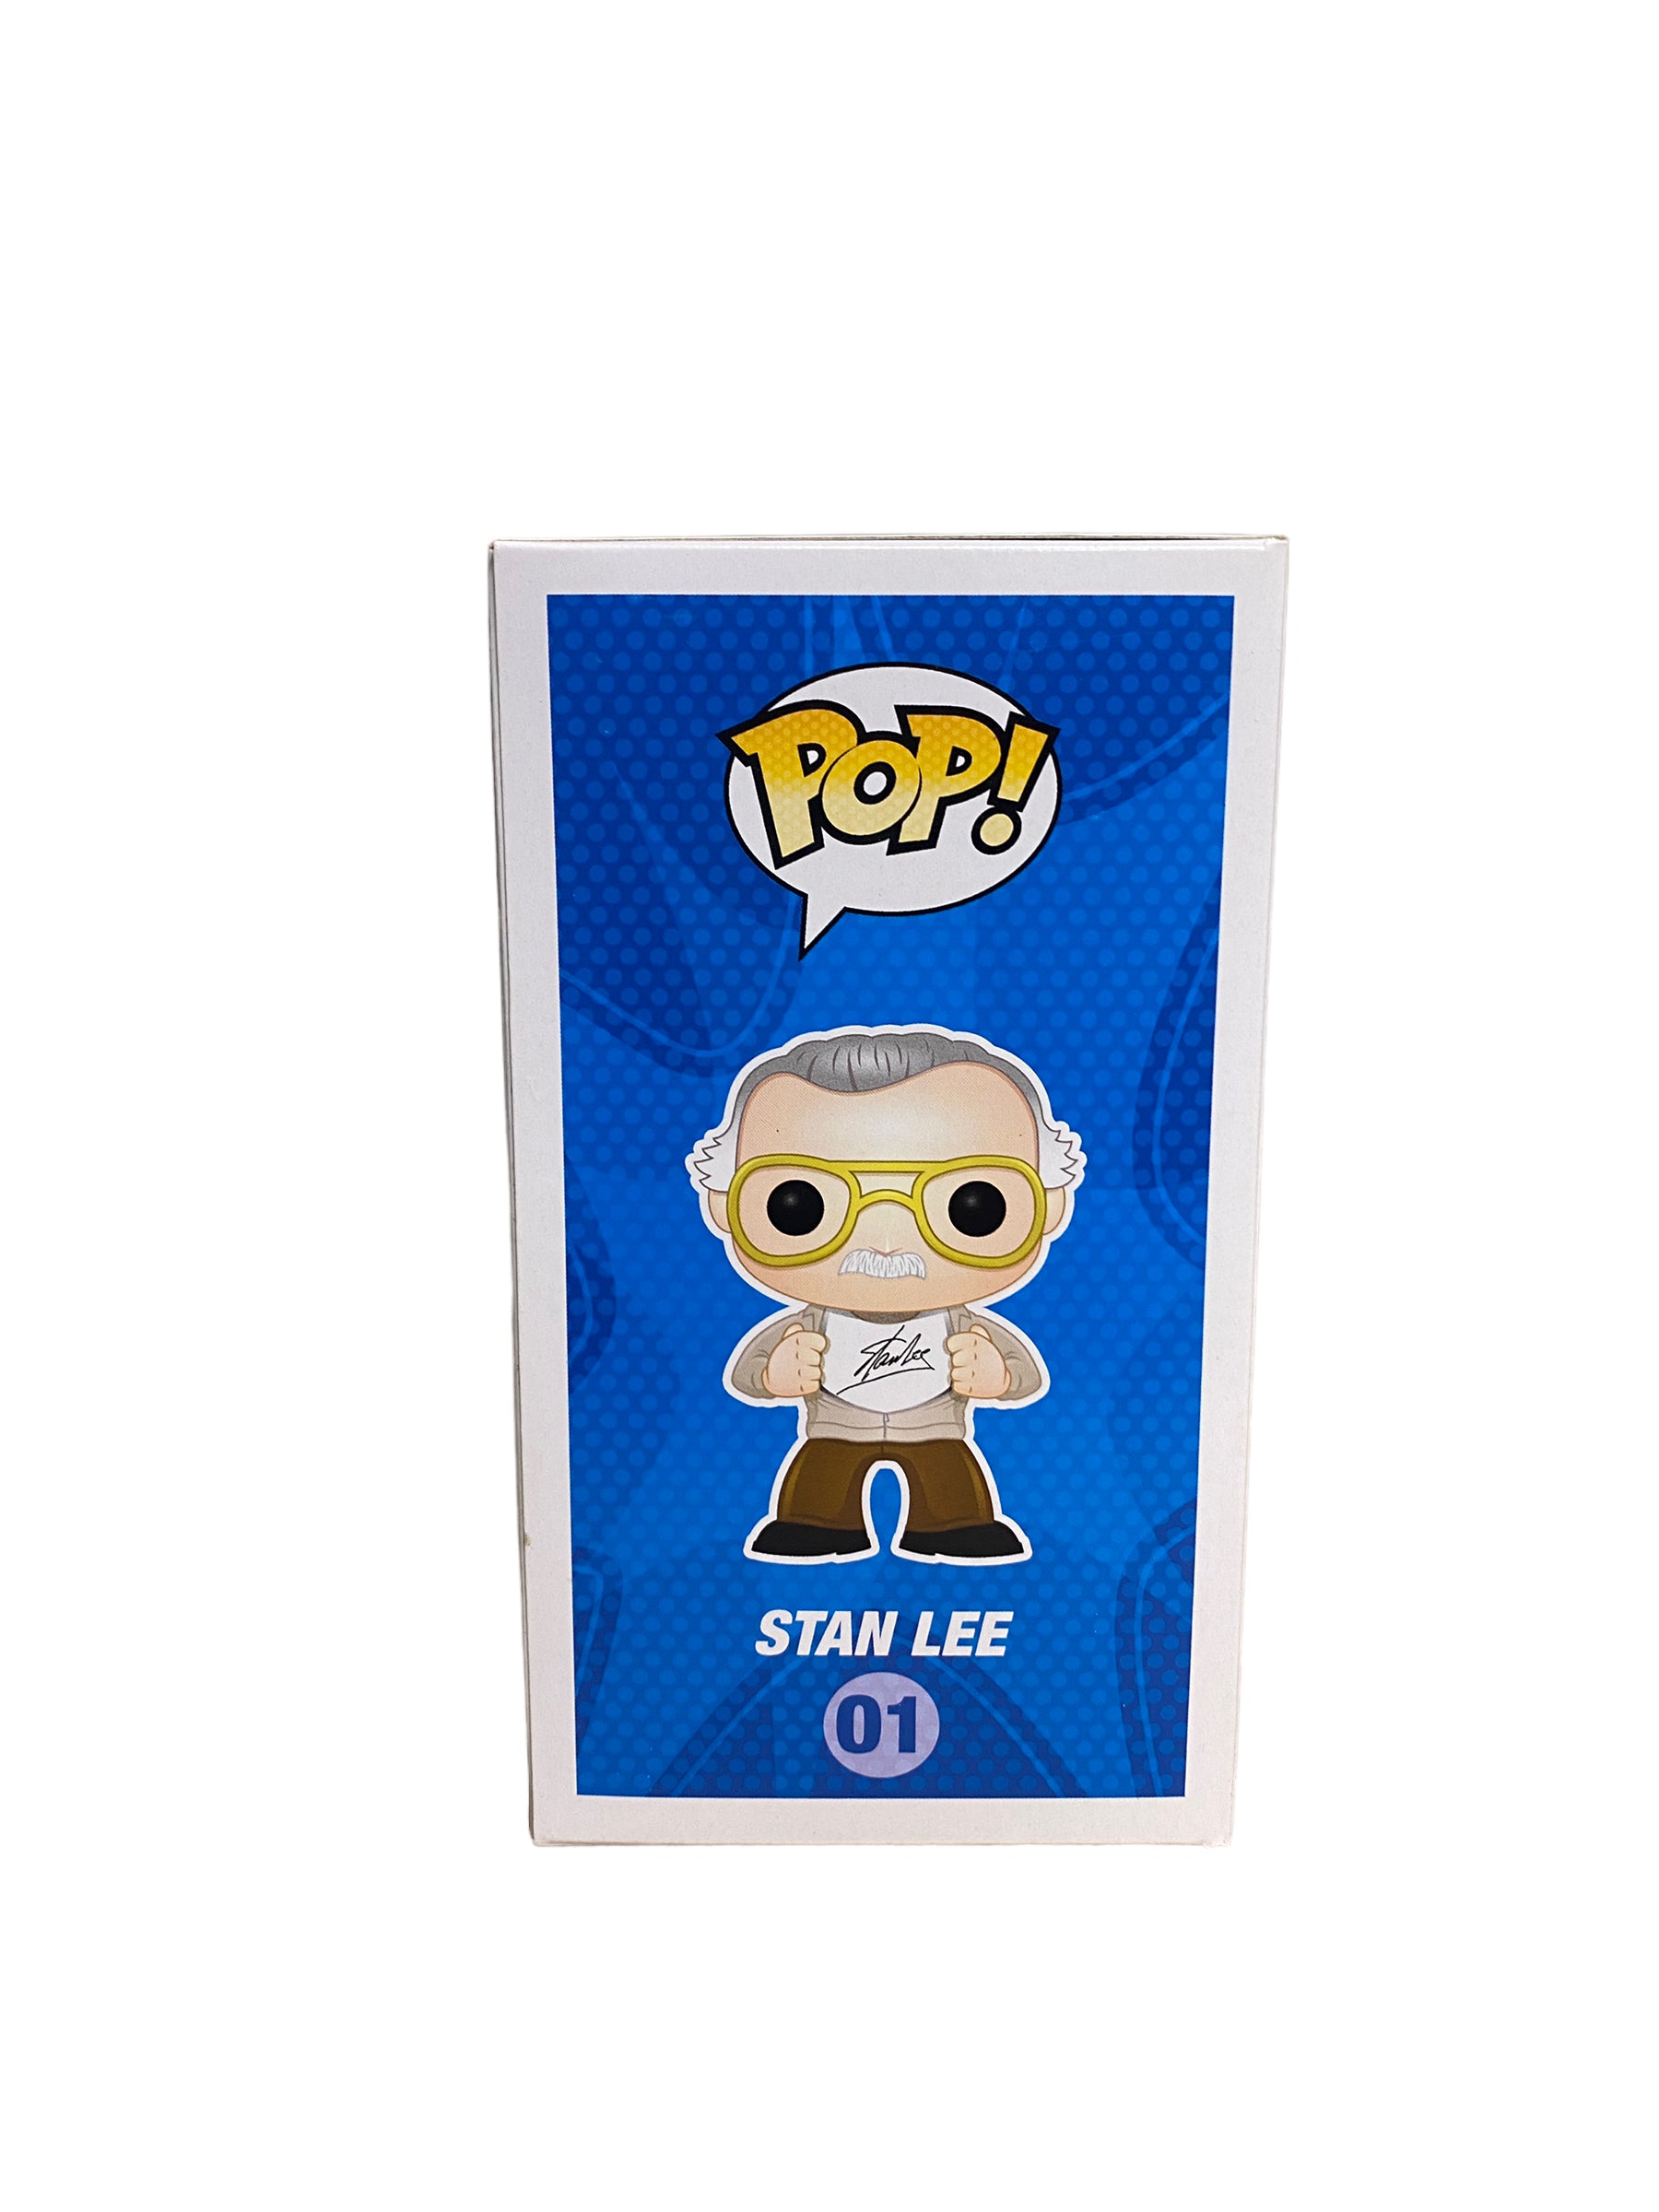 Stan Lee #01 (Excelsior) Funko Pop! - Wizard World Chicago 2014 Exclusive LE1000 Pcs - Condition 9/10